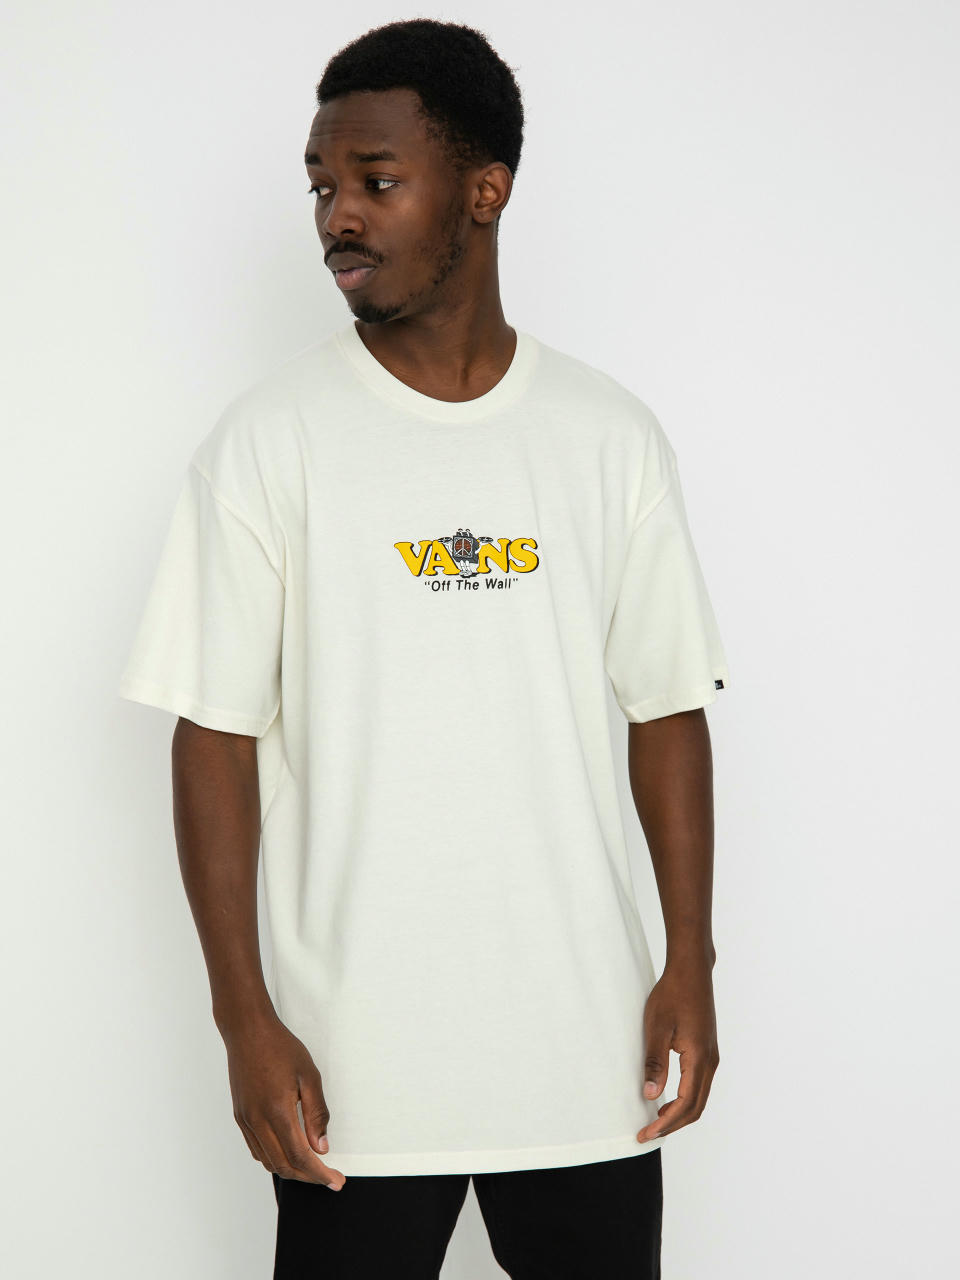 Vans Bad Brains 1982 T Shirt in stock at SPoT Skate Shop